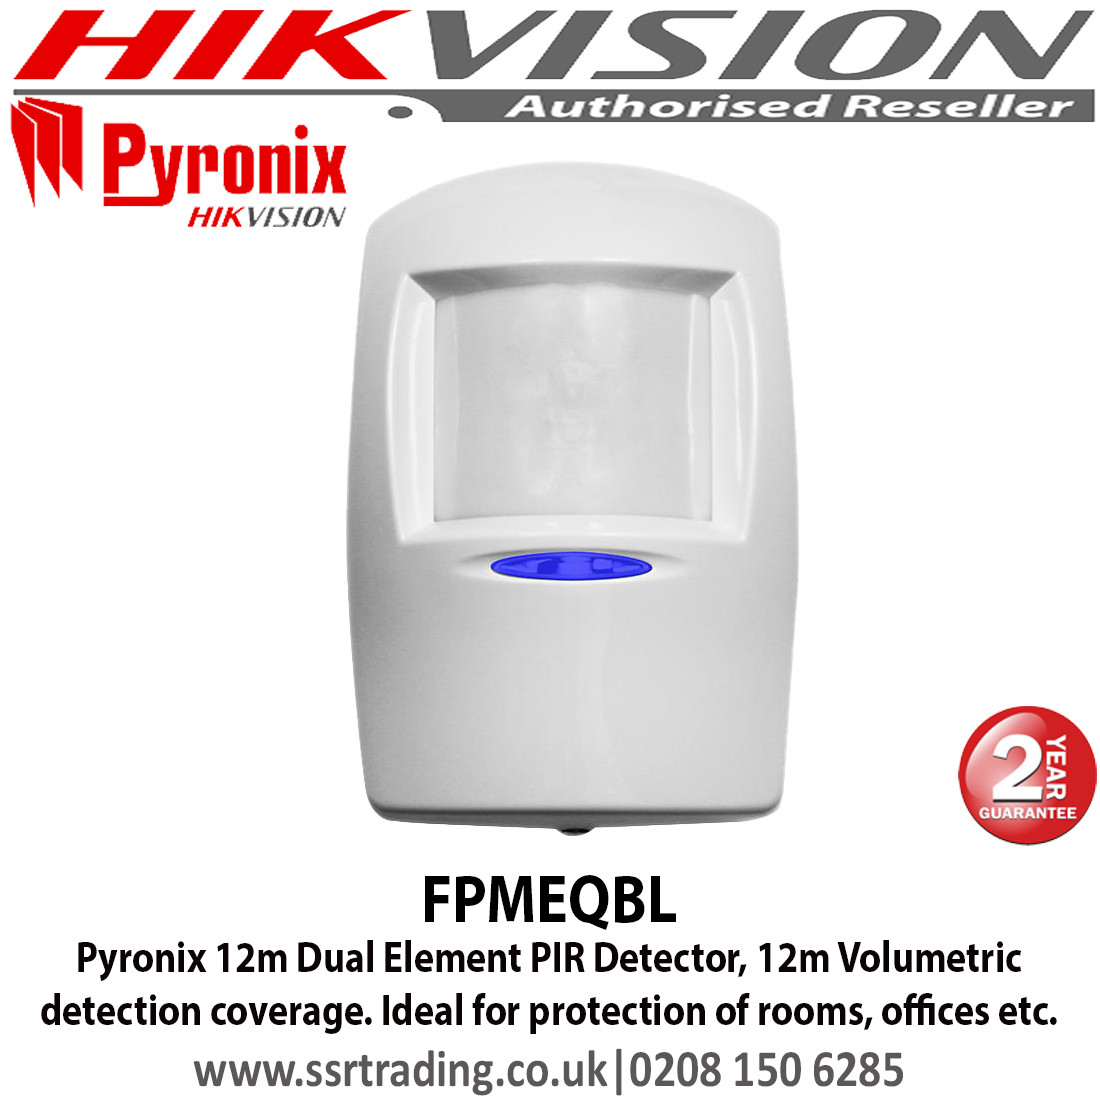 Pyronix 12m Dual Element PIR Detector - FPMEQBL